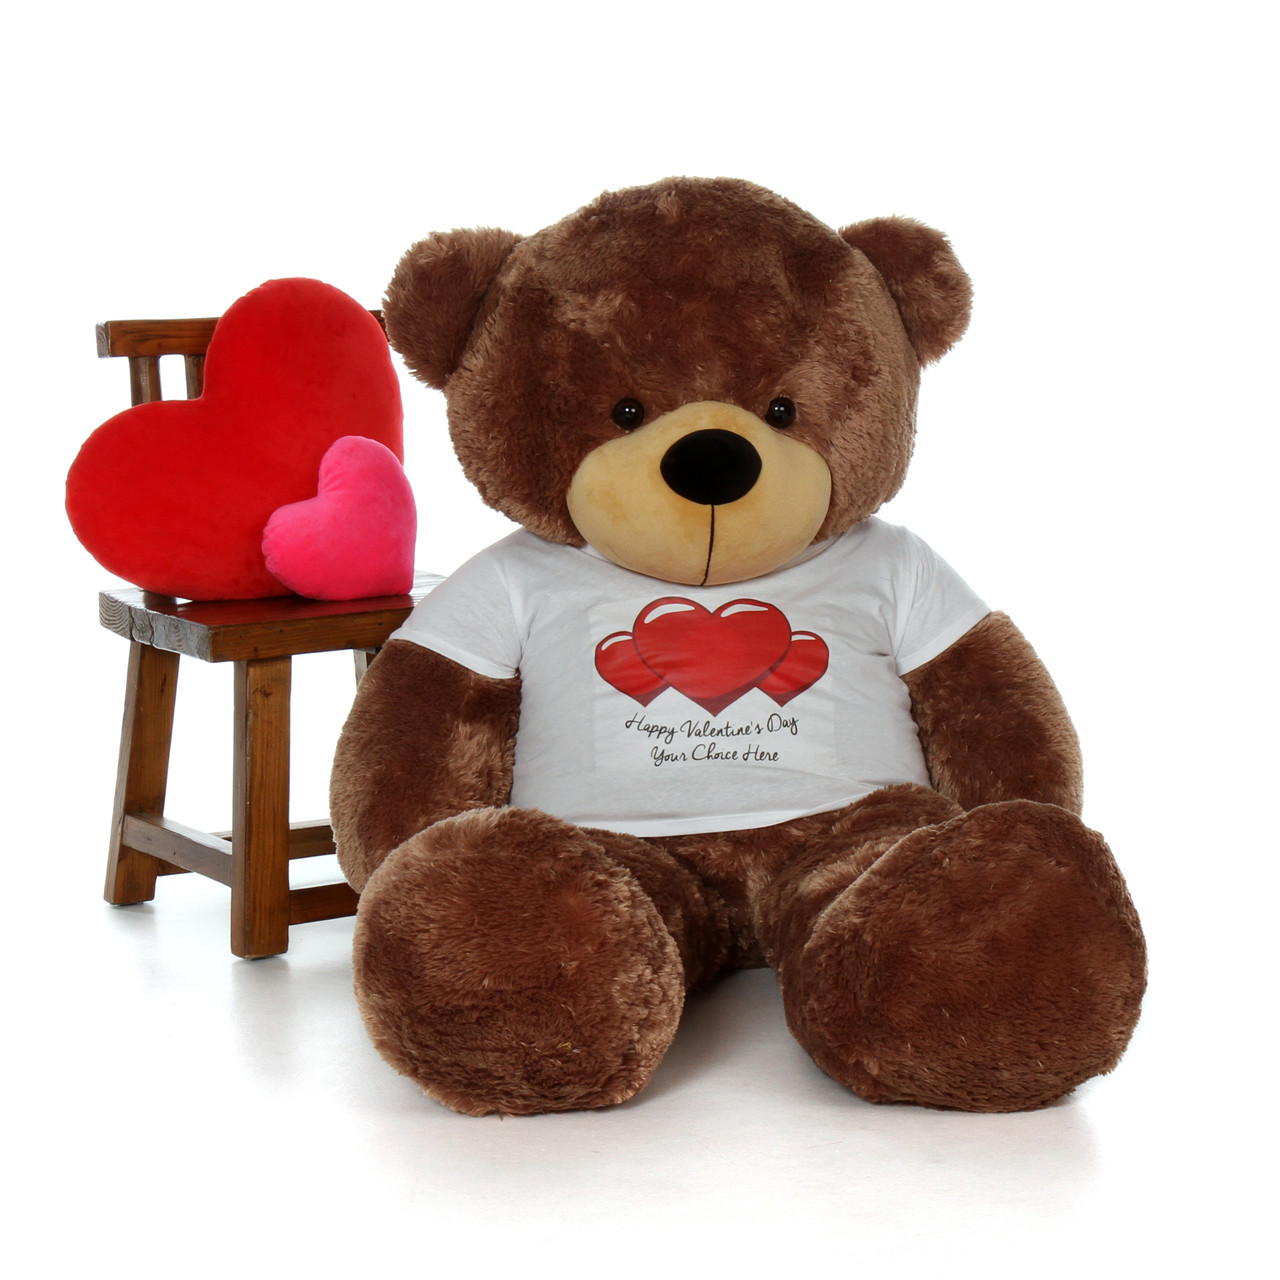 5ft Life Size Teddy Bear wearing customized Happy 